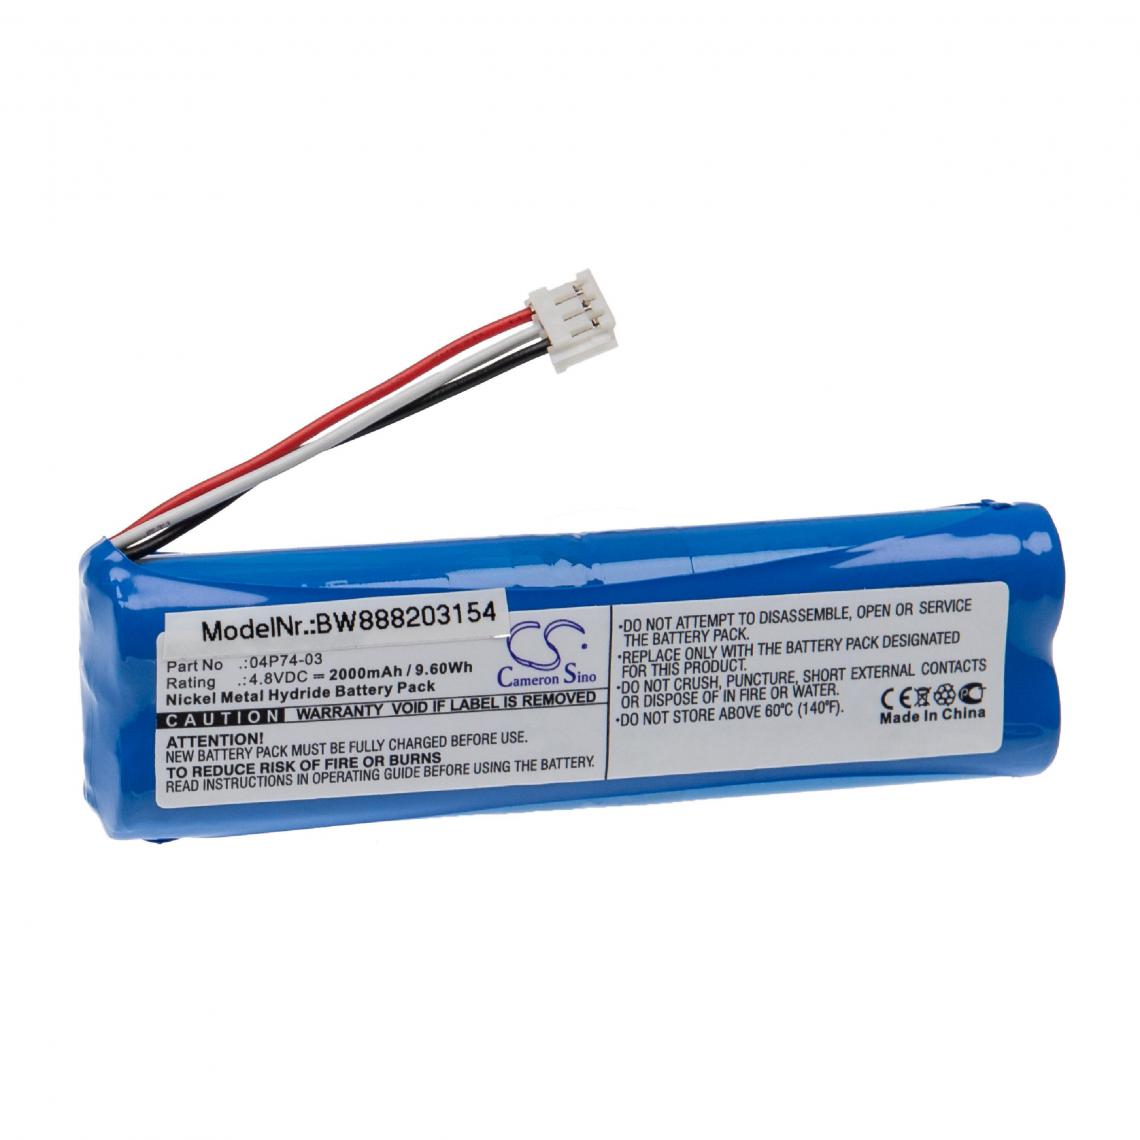 Vhbw - vhbw Batterie compatible avec Abbott i-STAT Printer appareil médical (2000mAh, 4,8V, NiMH) - Piles spécifiques